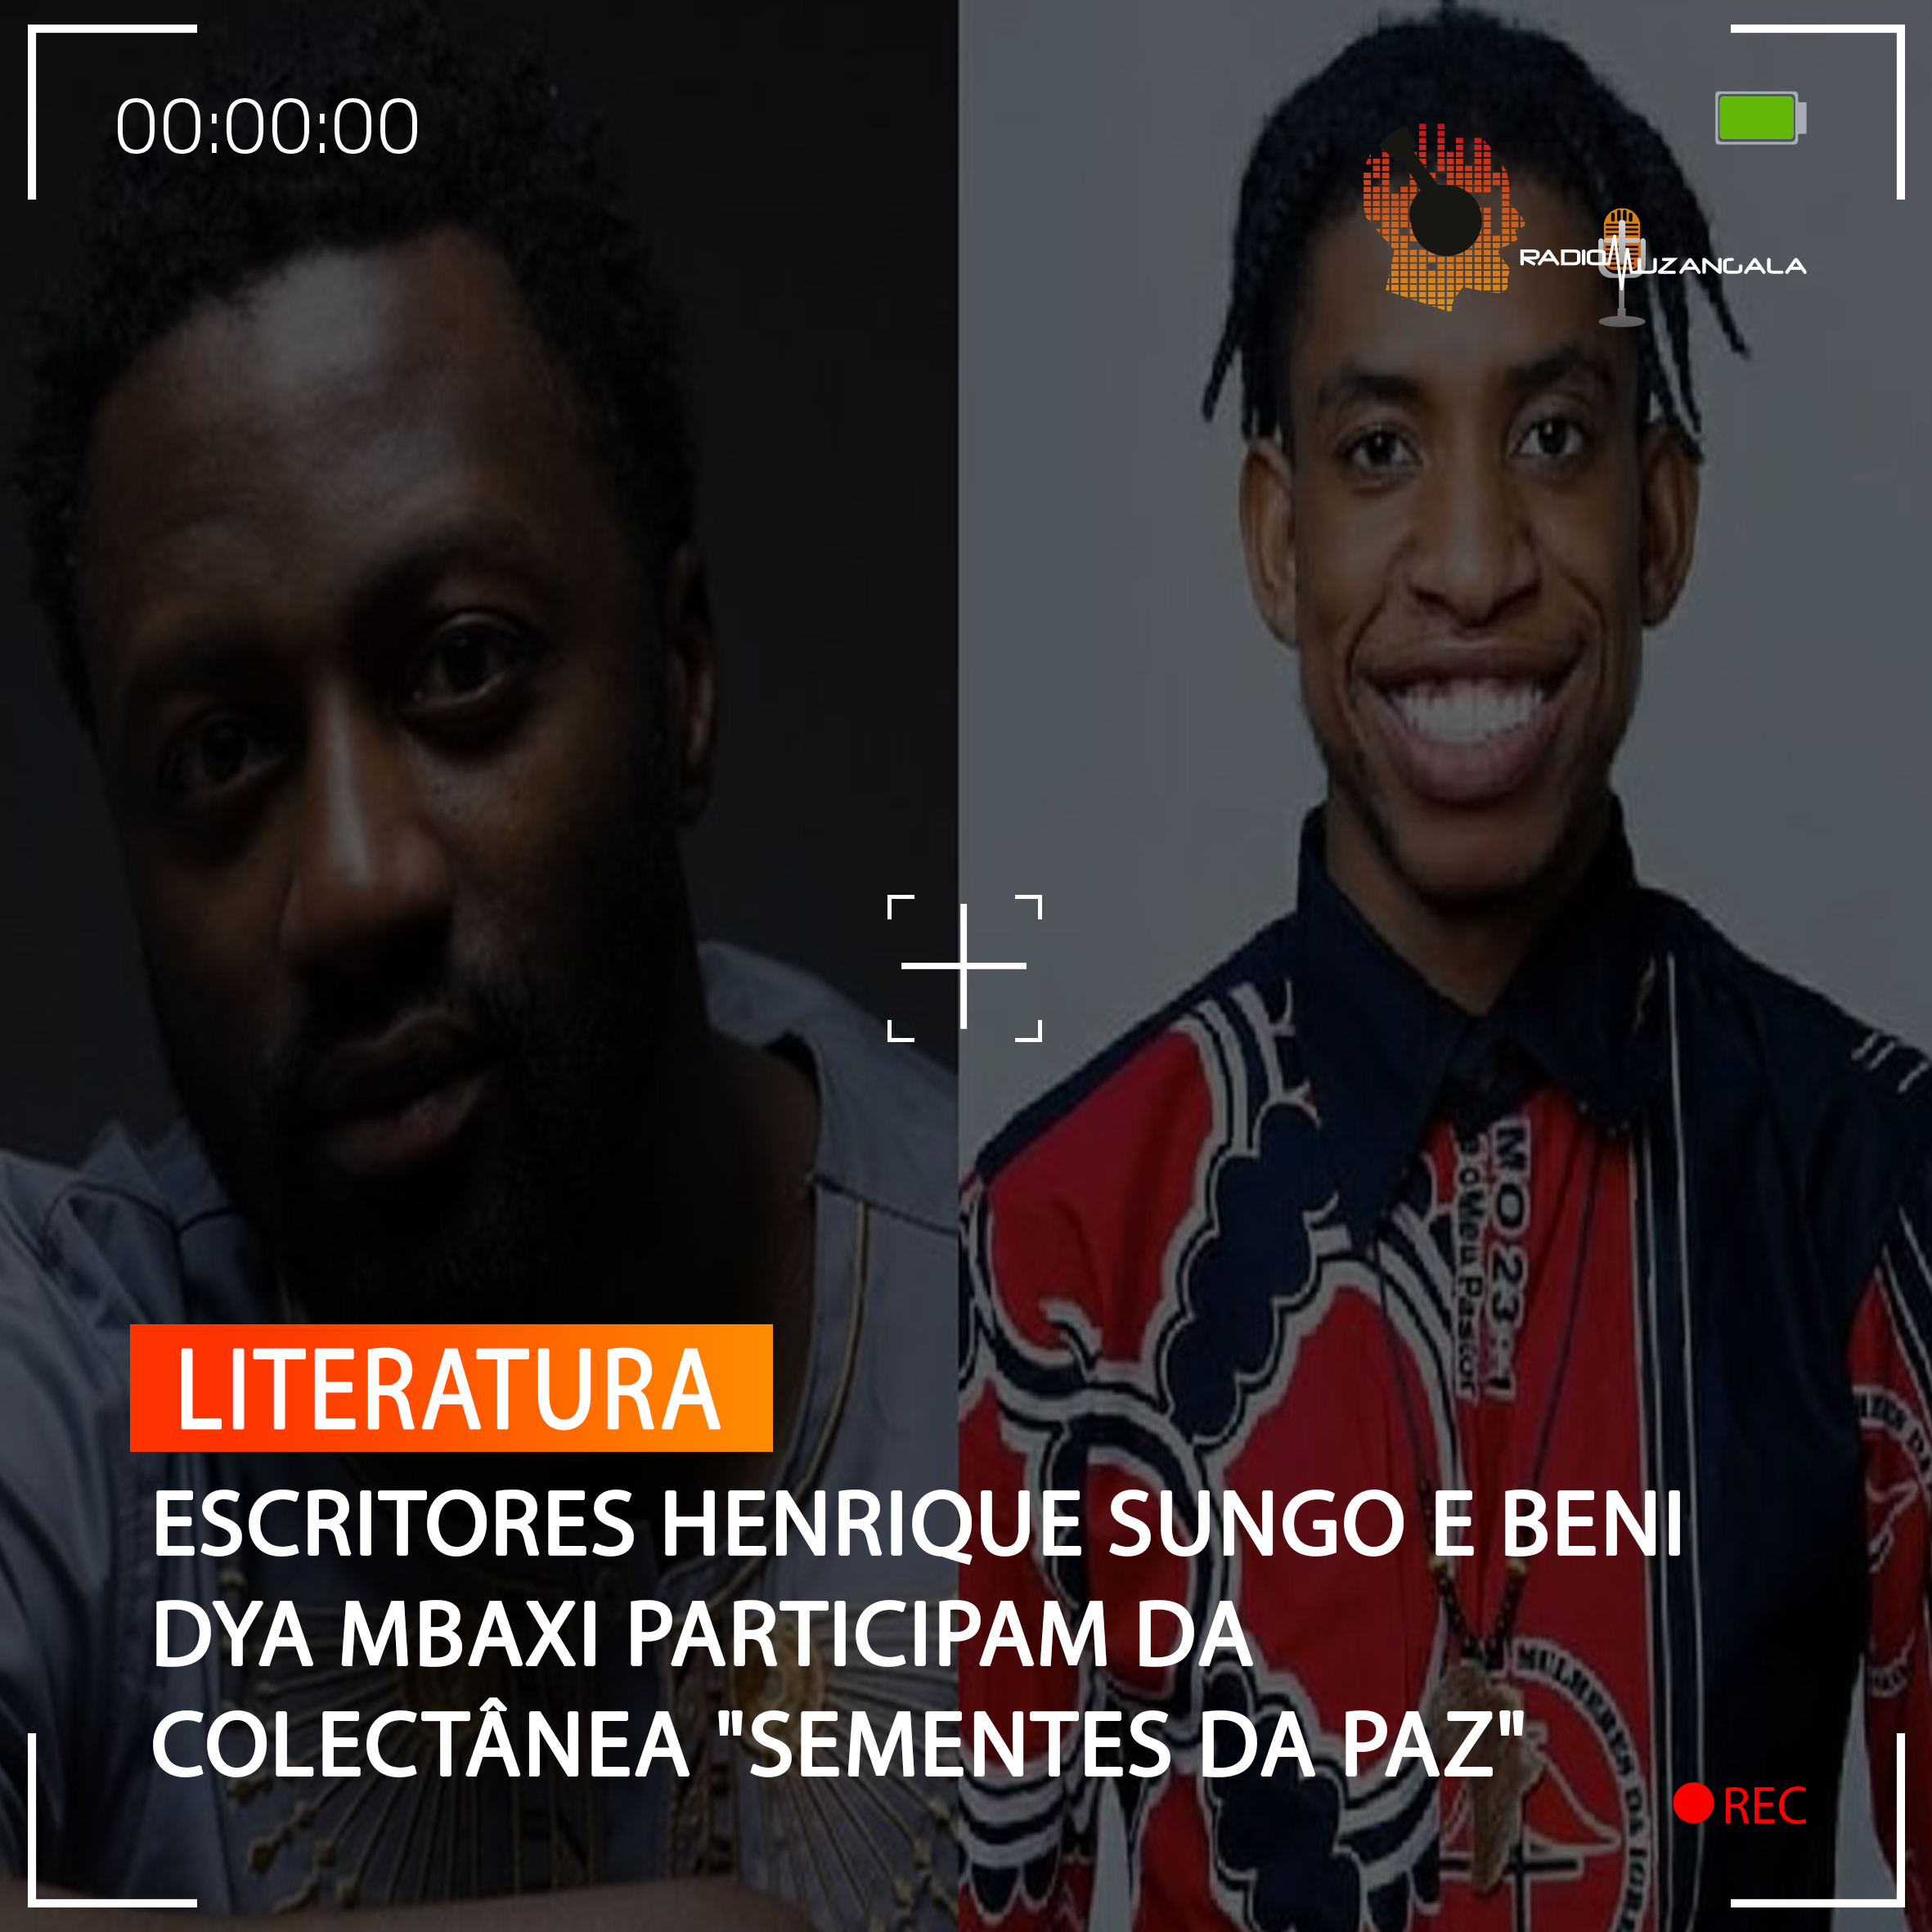  ESCRITORES HENRIQUE SUNGO E BENI DYA MBAXI PARTICIPAM DA COLECTÂNEA “SEMENTES DA PAZ”